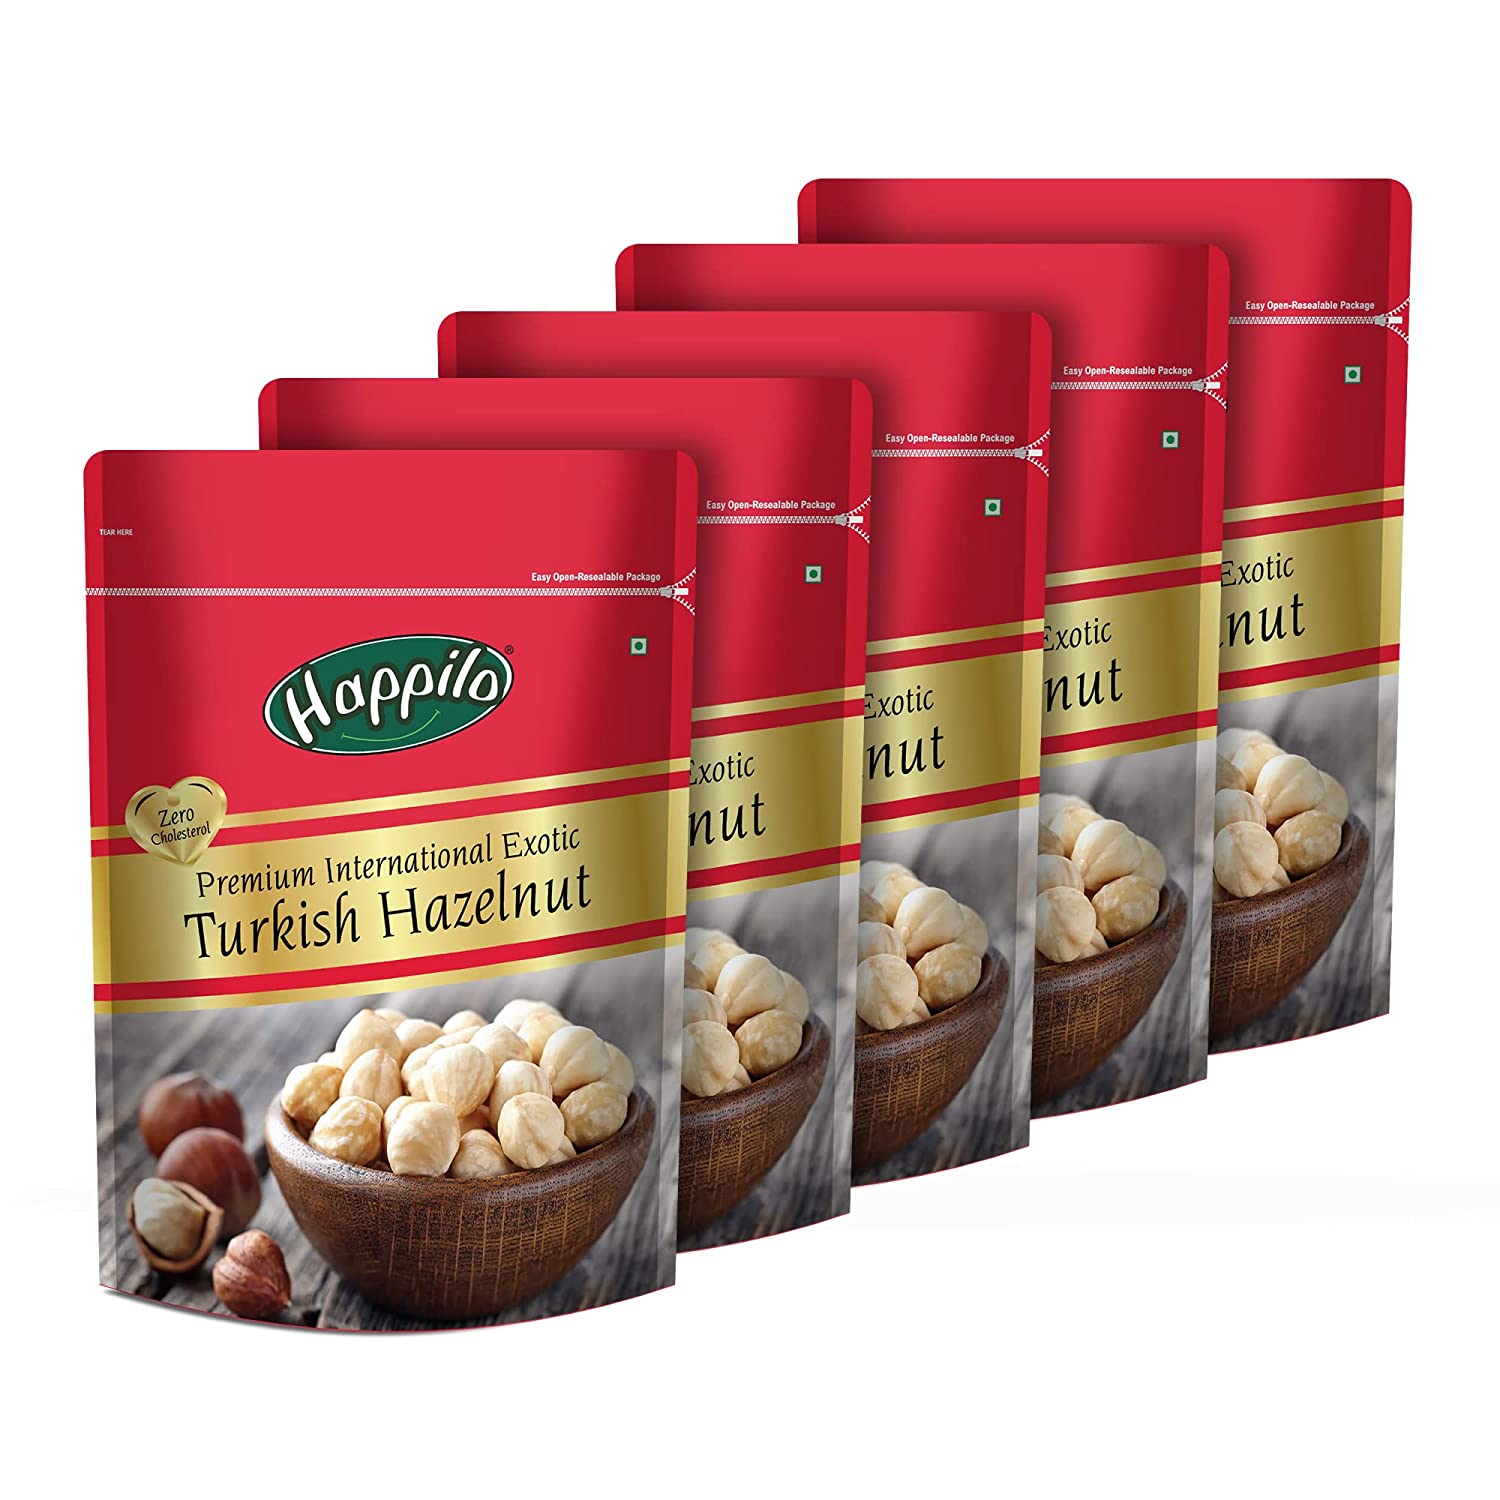 Happilo 100% Natural Premium Turkish Hazelnuts